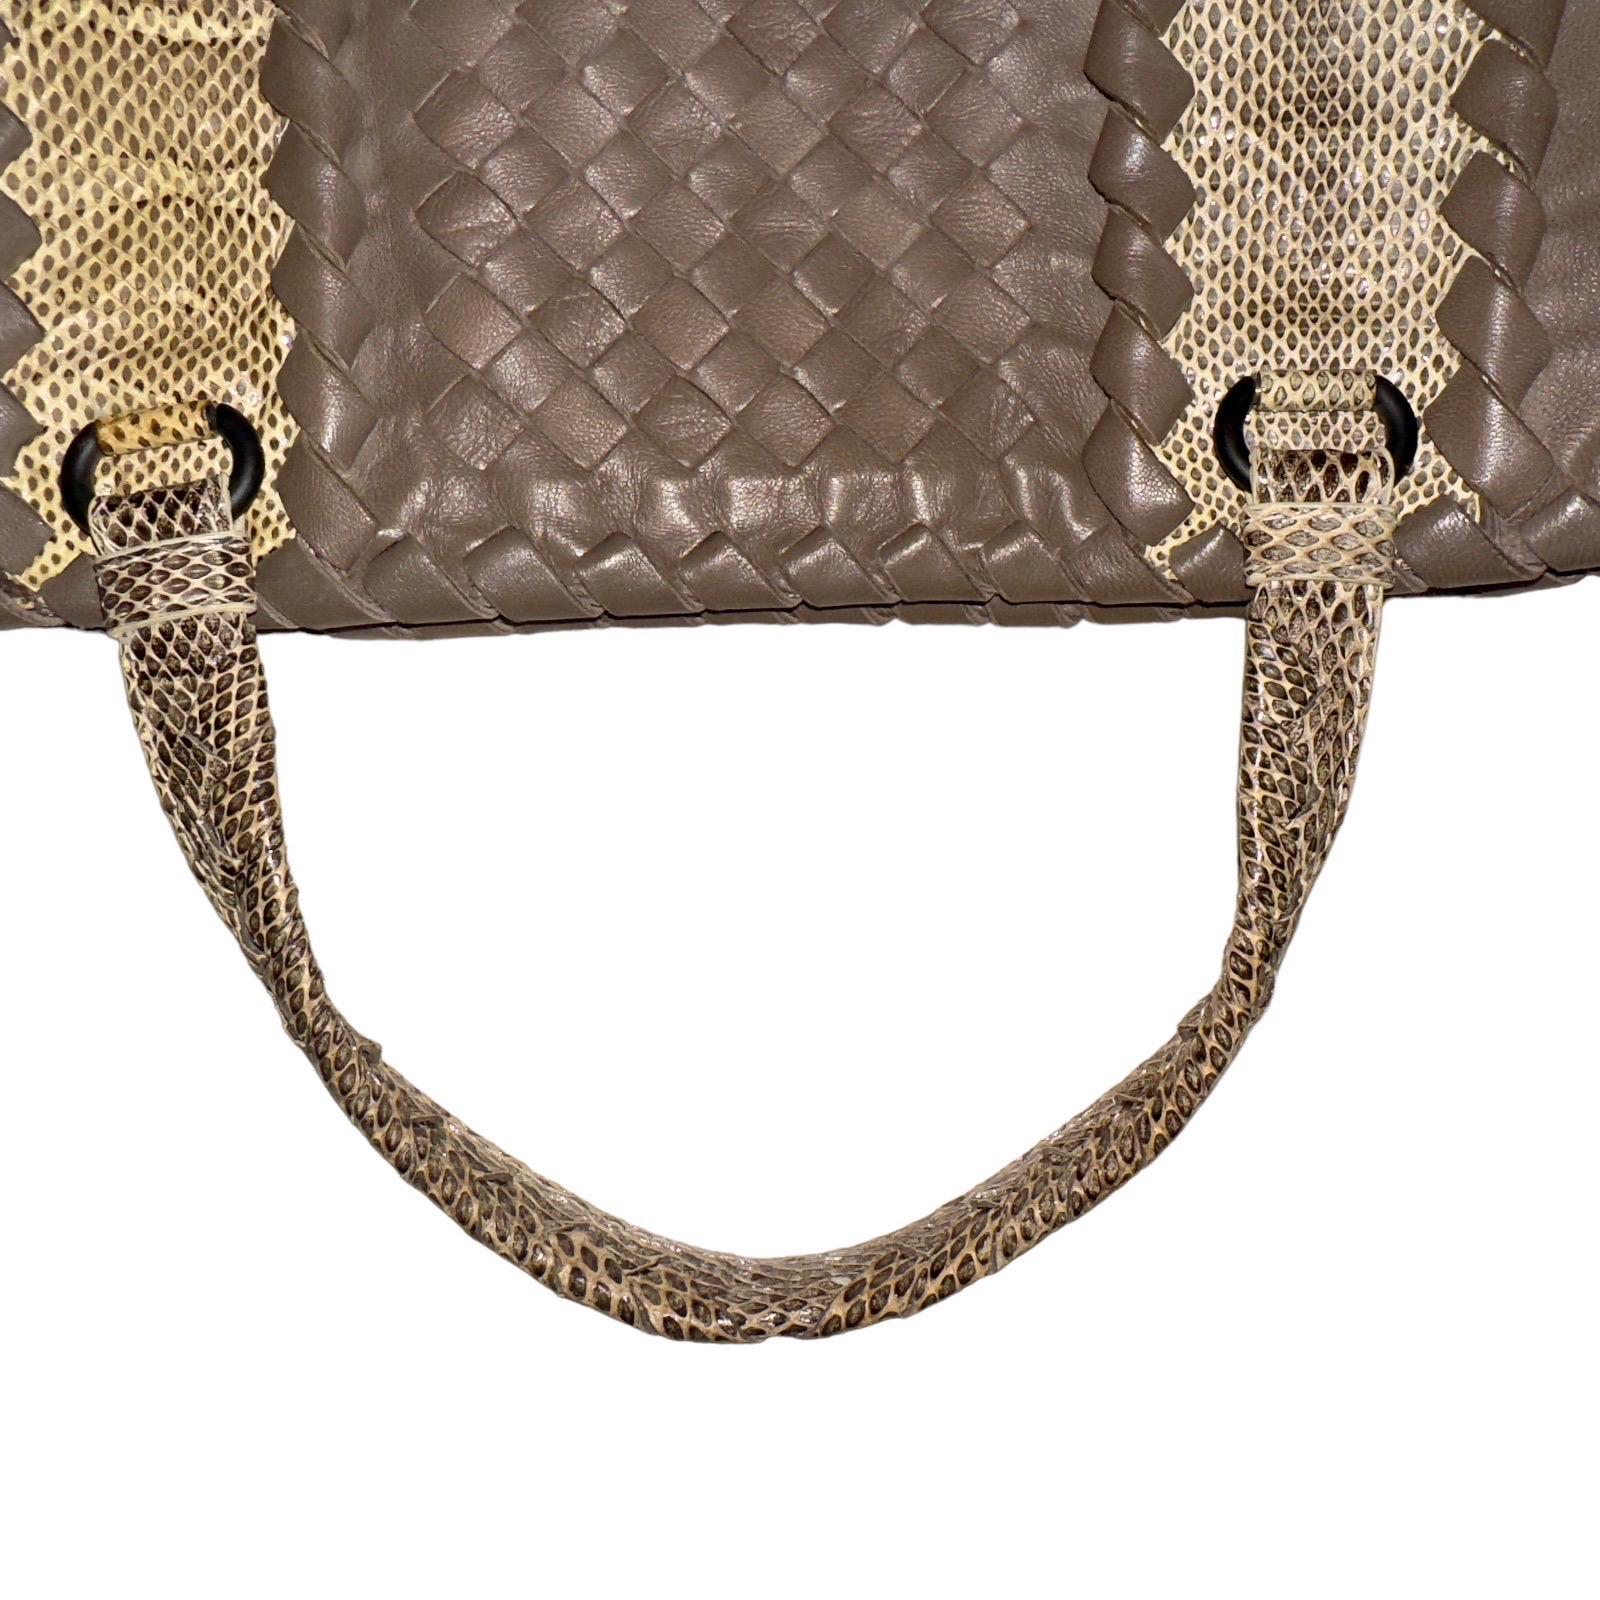 BOTTEGA VENETA Exotic Woven Leather Intrecciato Nappa Ayers XL Tote Shoulder Bag For Sale 9